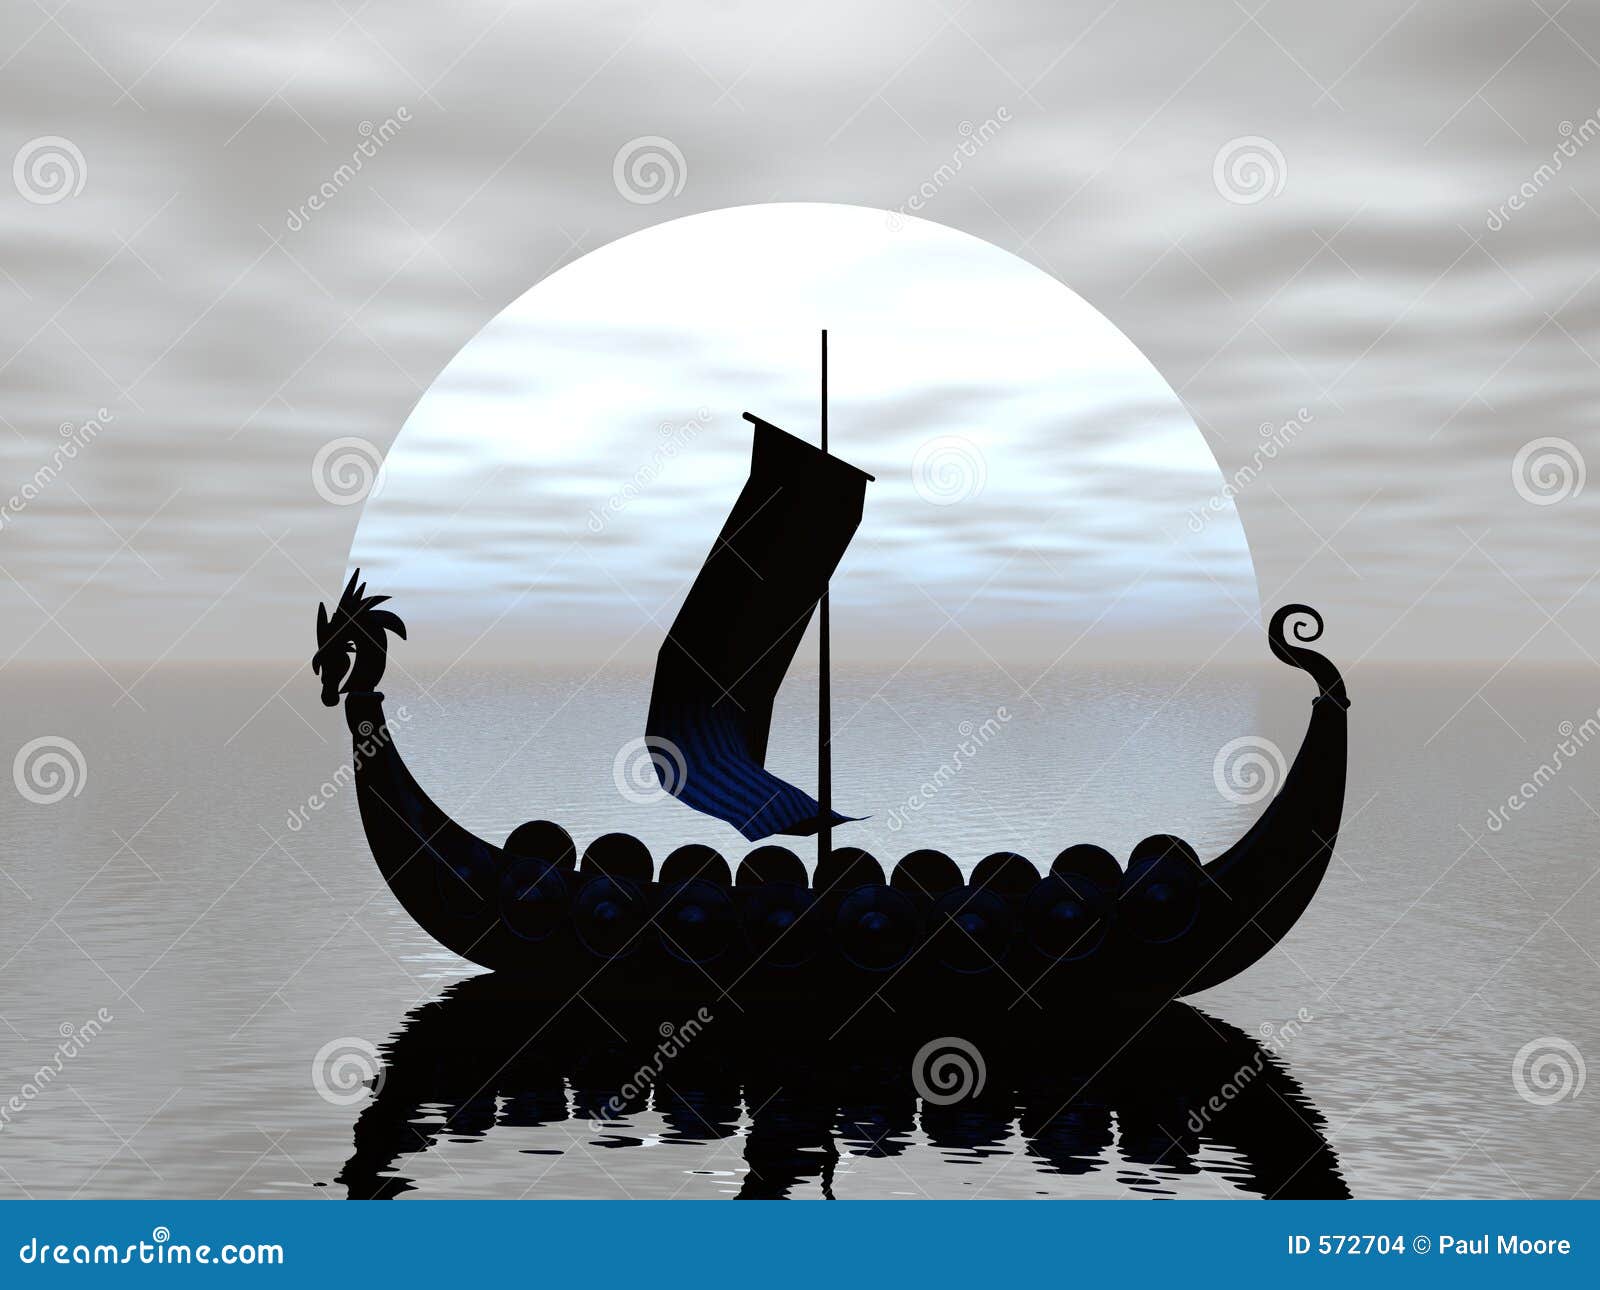 viking ship silhouette stock images - image: 572704